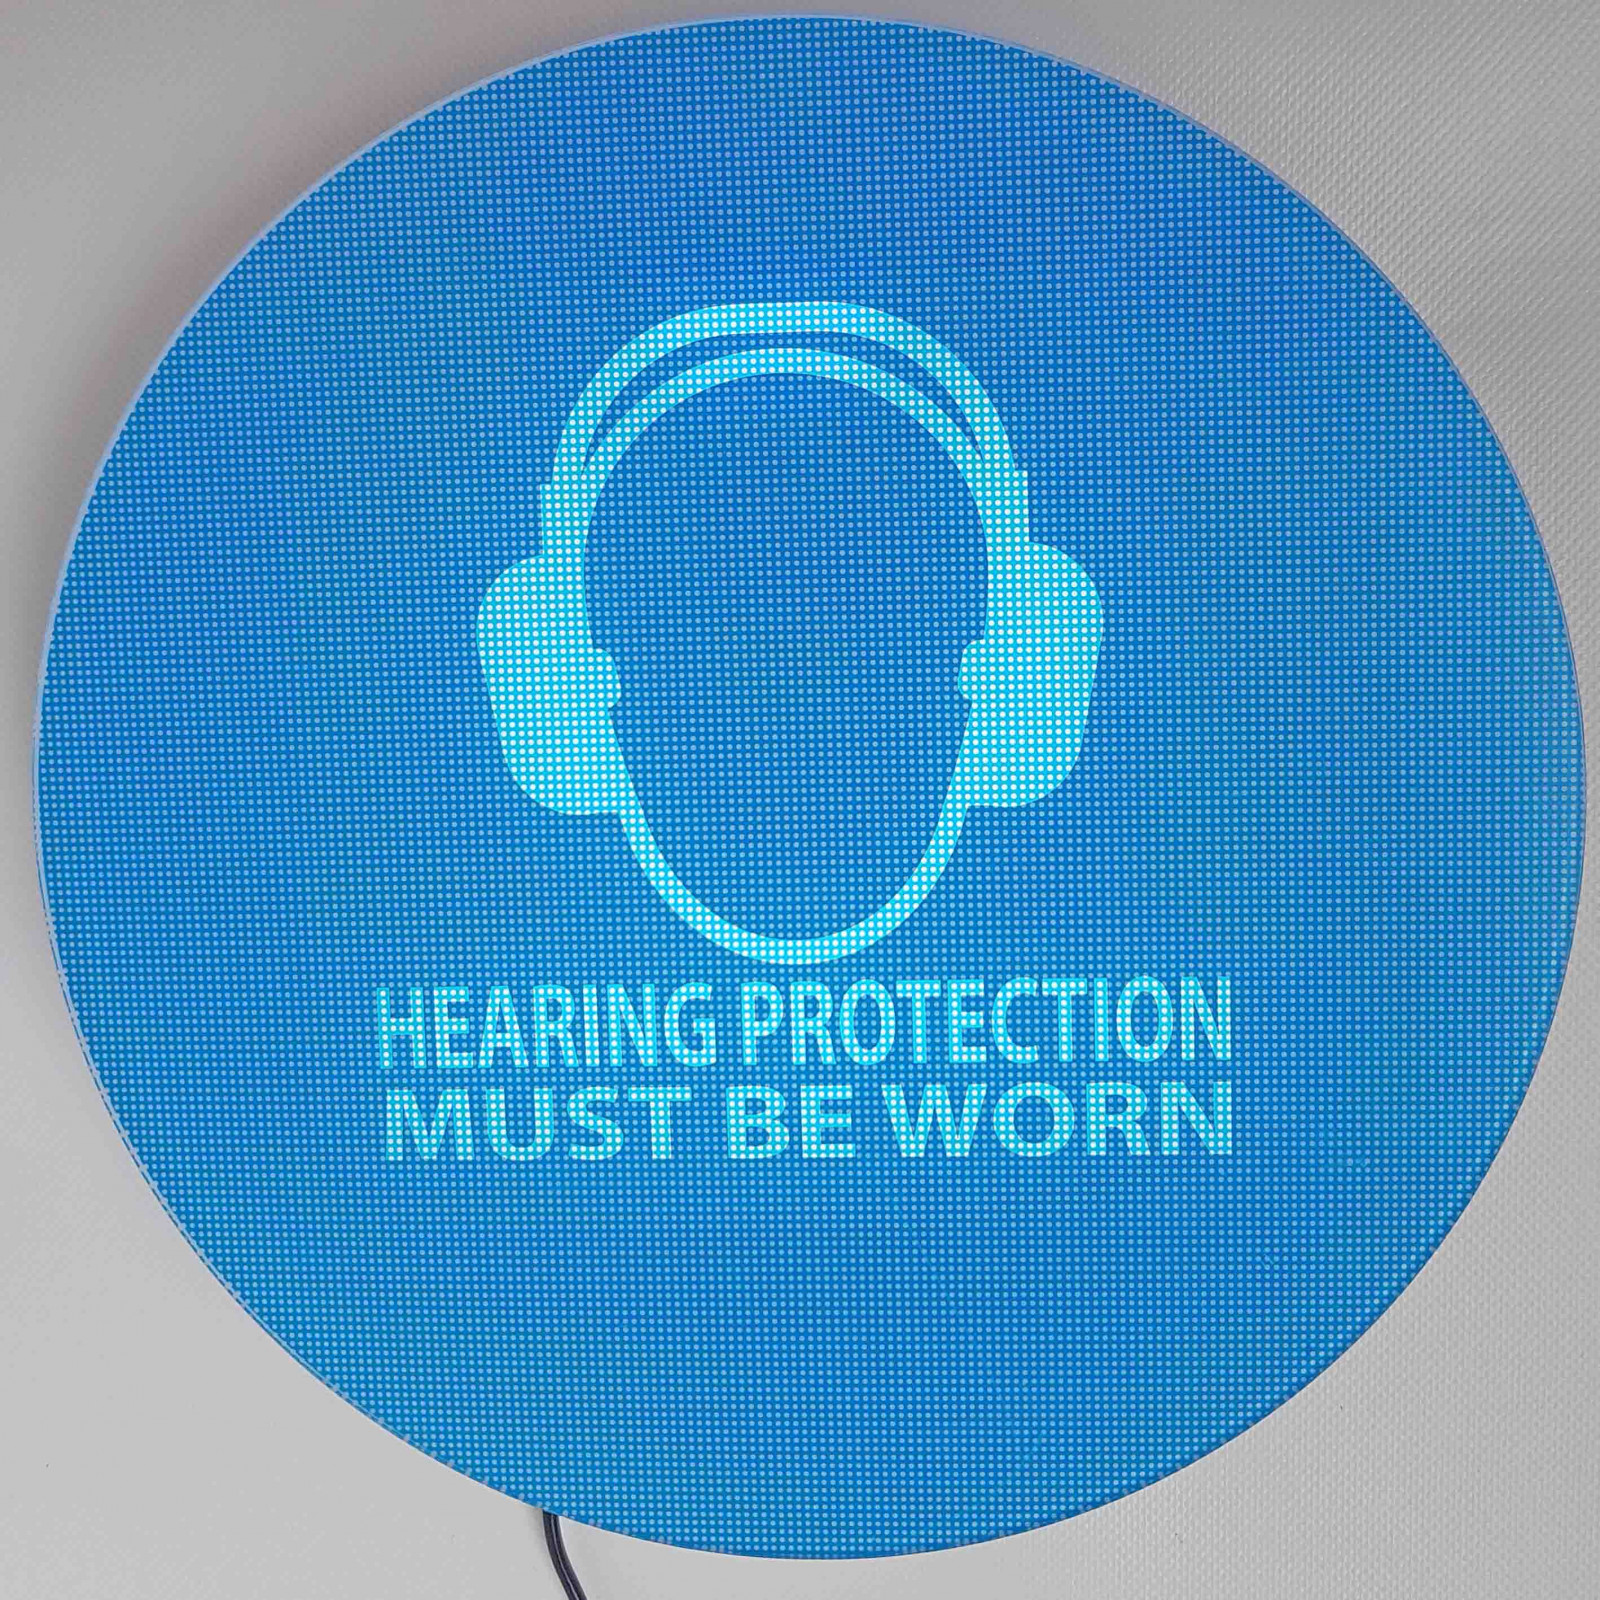 New weatherproof interactive noise warning signs -...